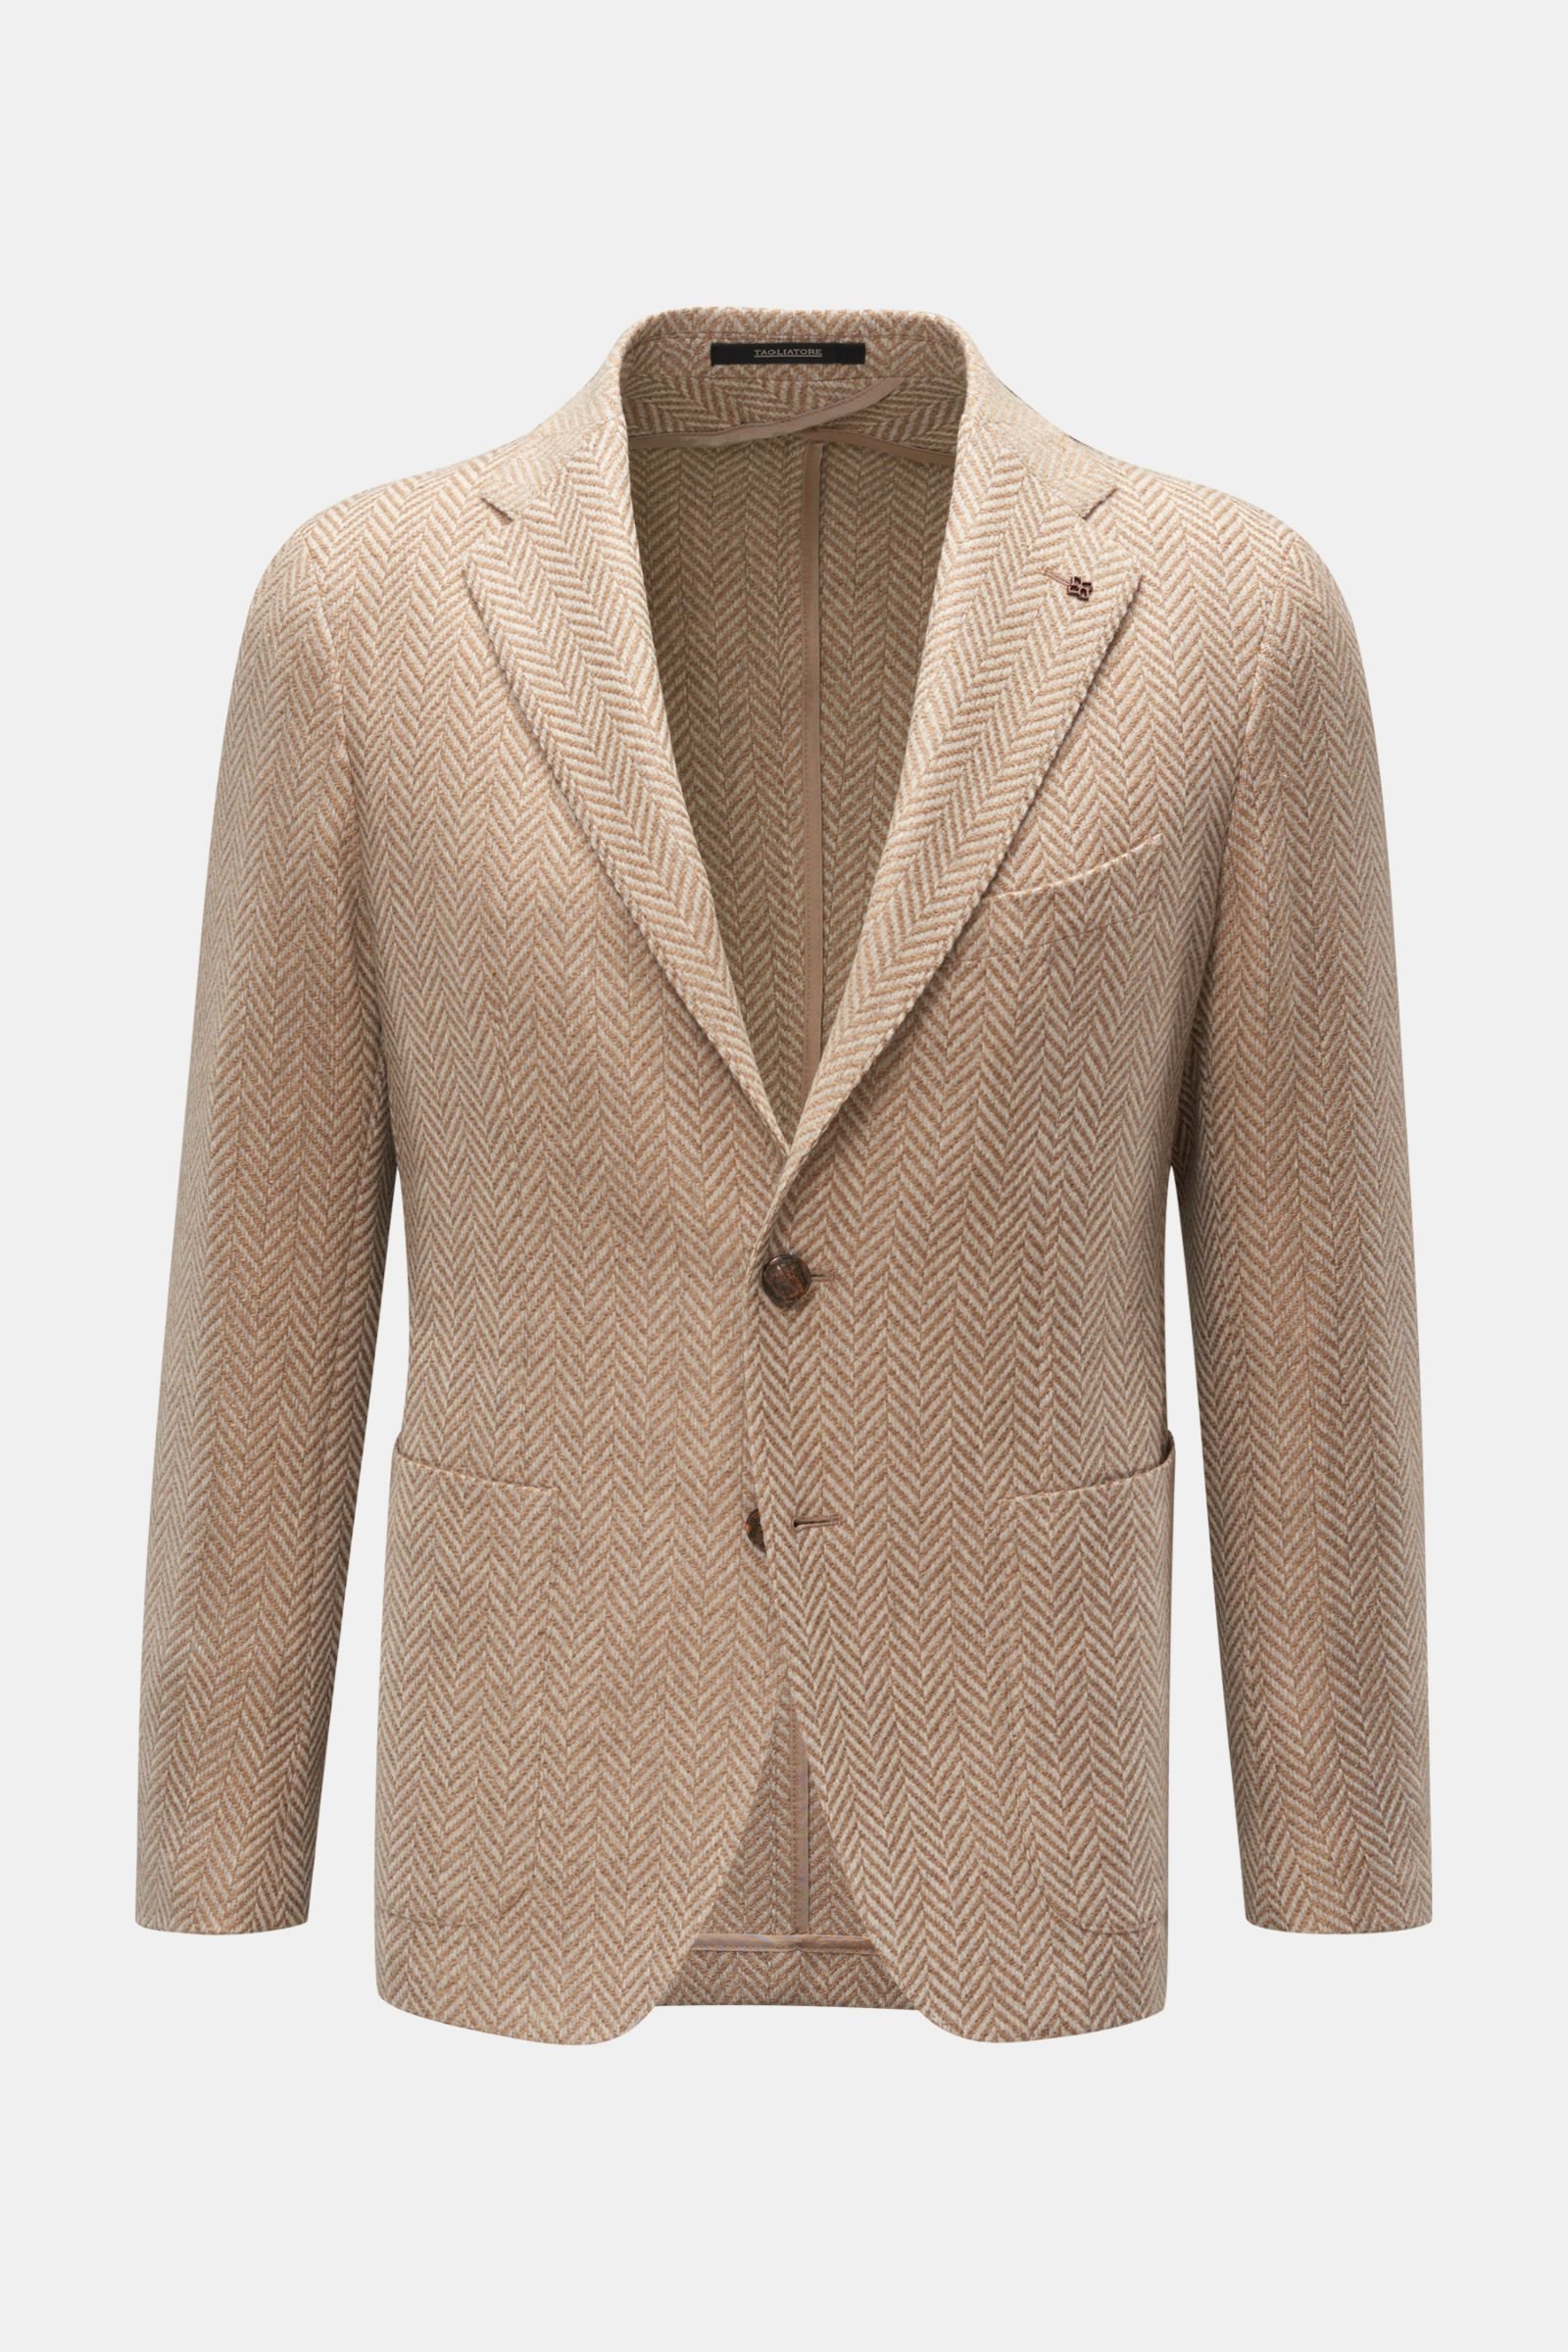 Smart-casual jacket beige/cream patterned